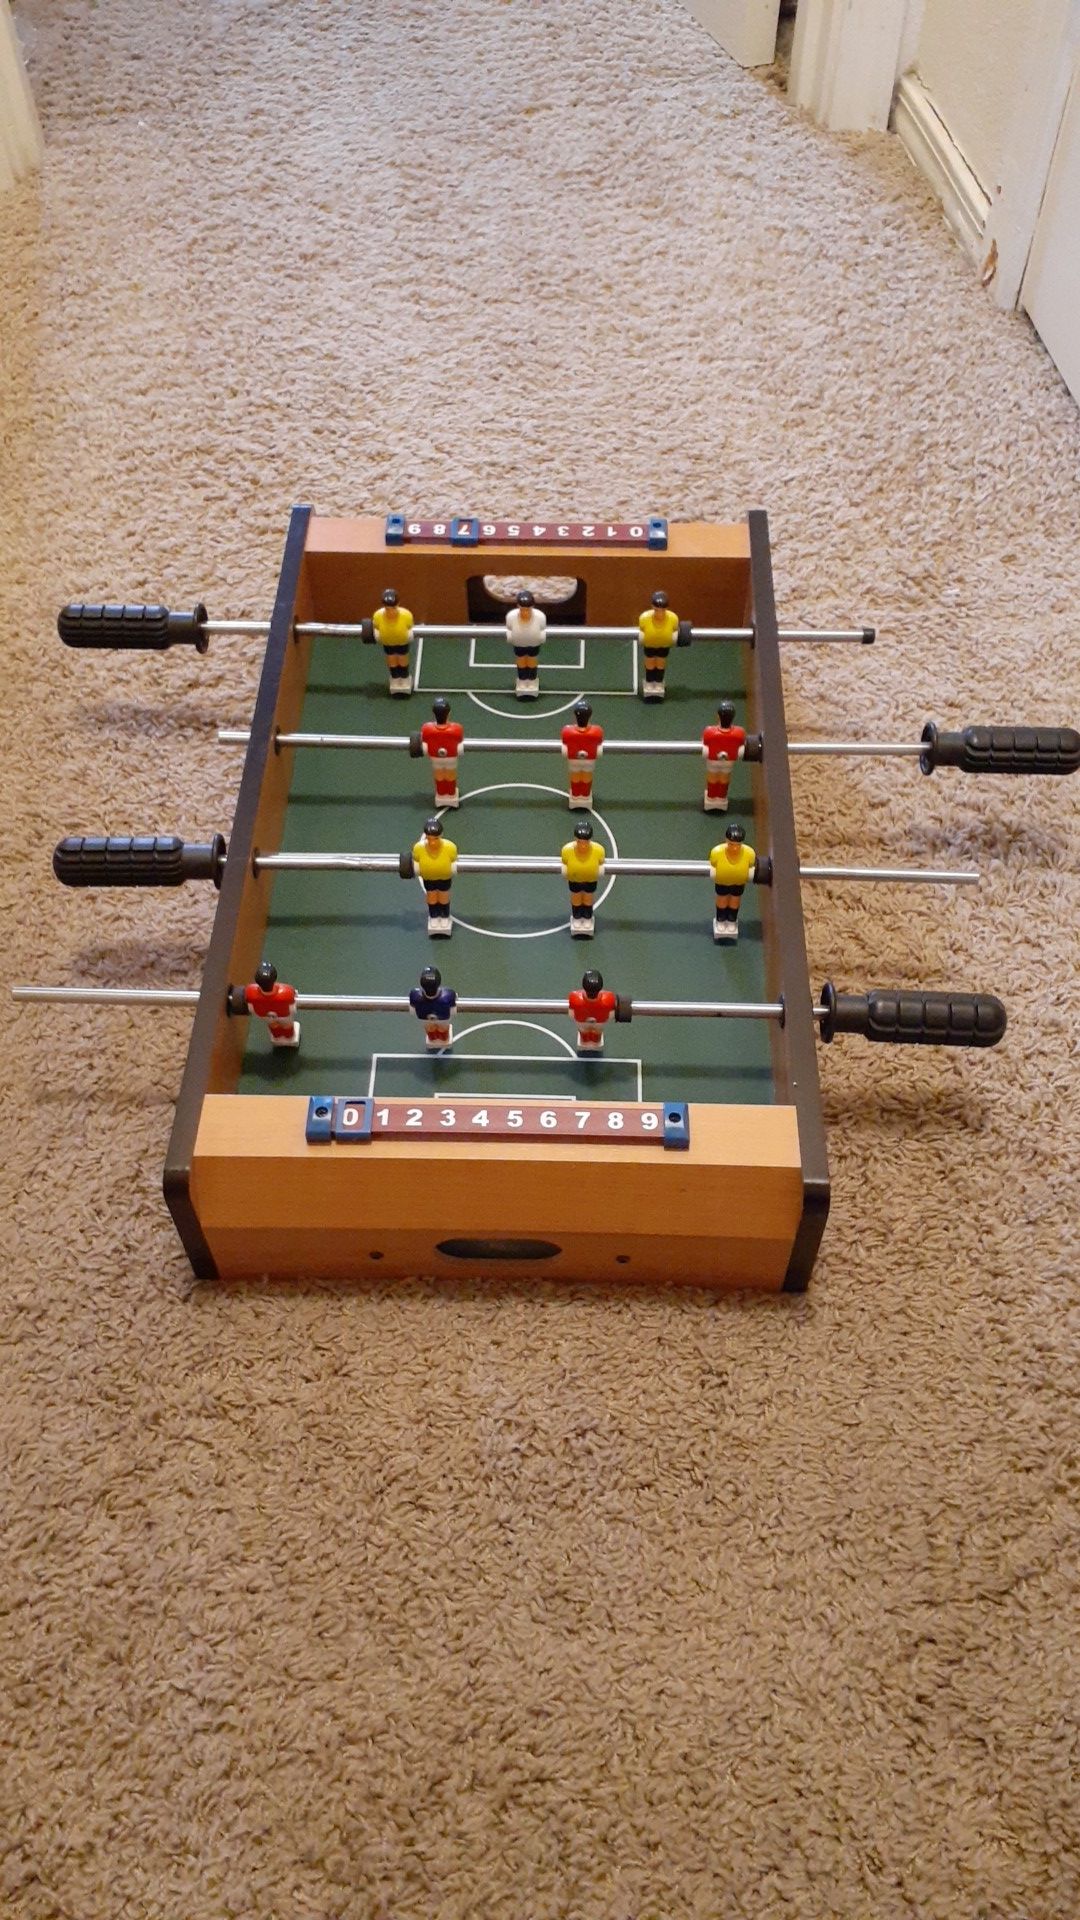 Mini football table . Missing balls